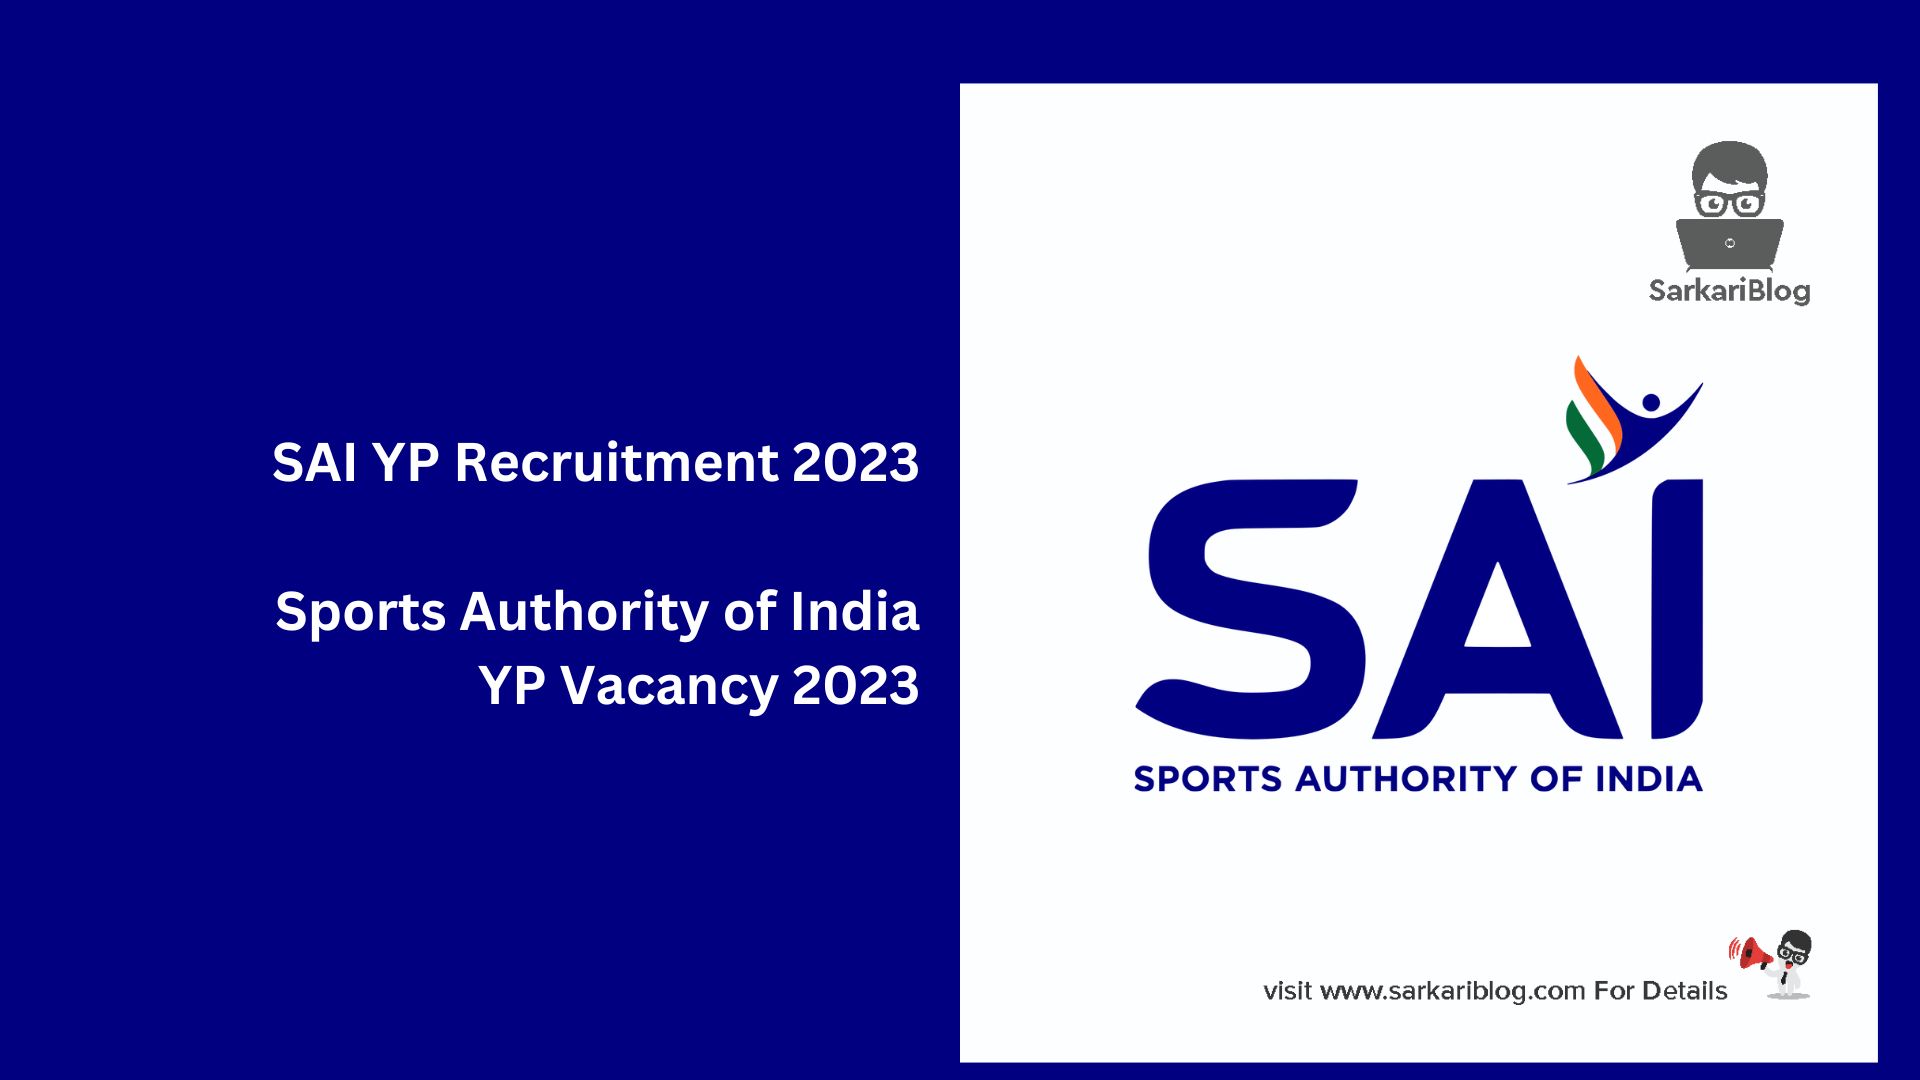 SAI YP Recruitment 2023